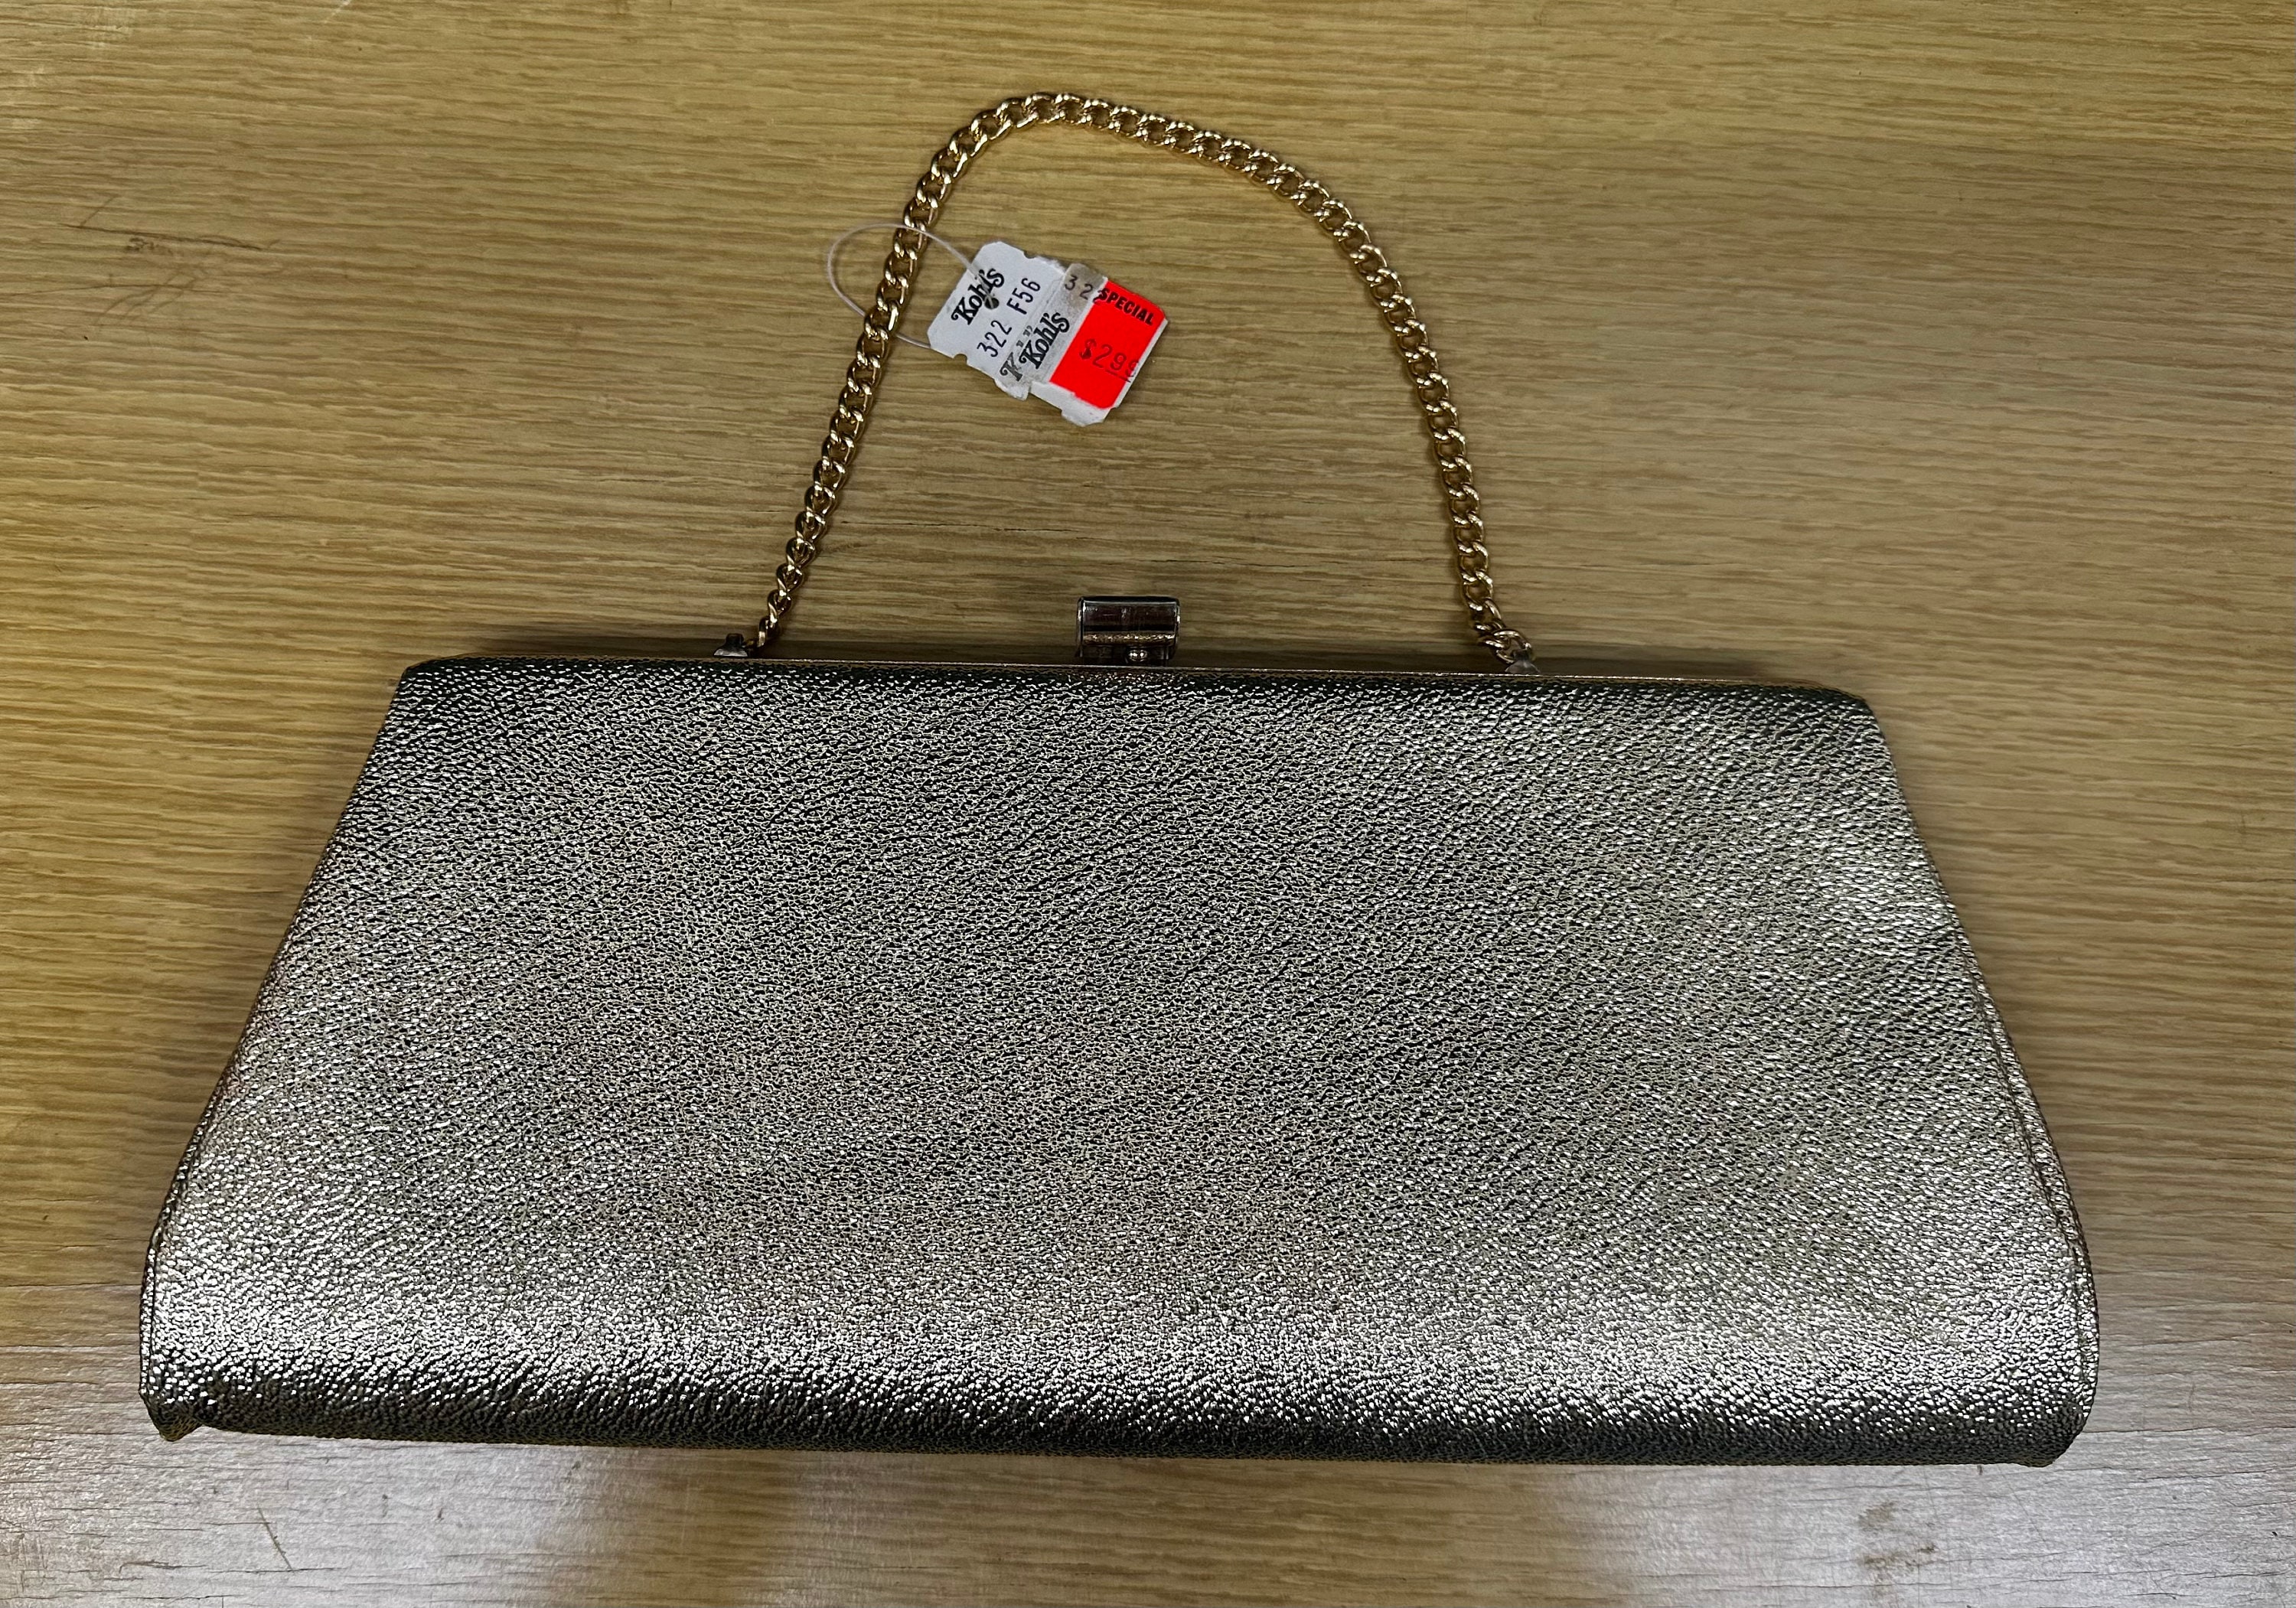 Buy New Stylish Michael Kors Handbag For Girls (LAK052)